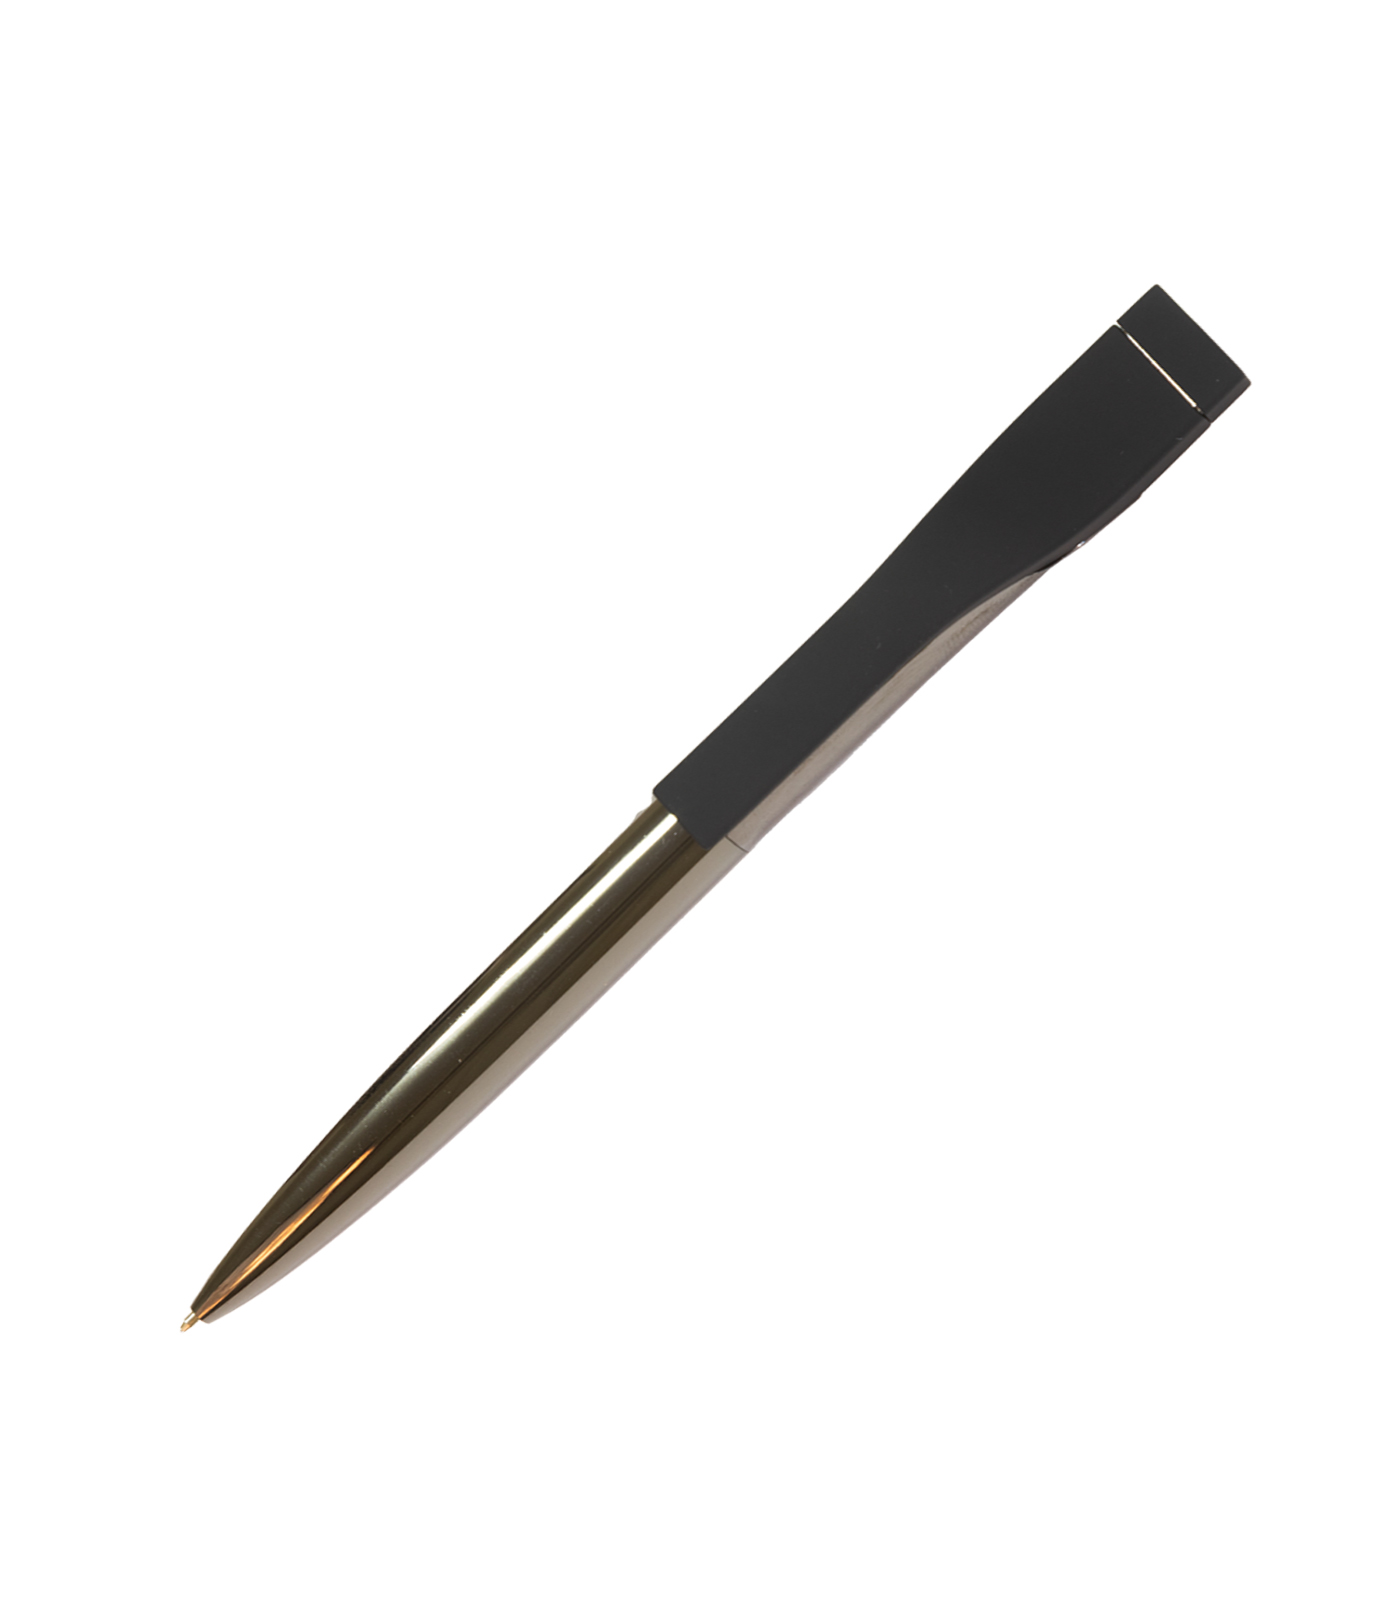 Atom Ballpoint Pen With Flash memory